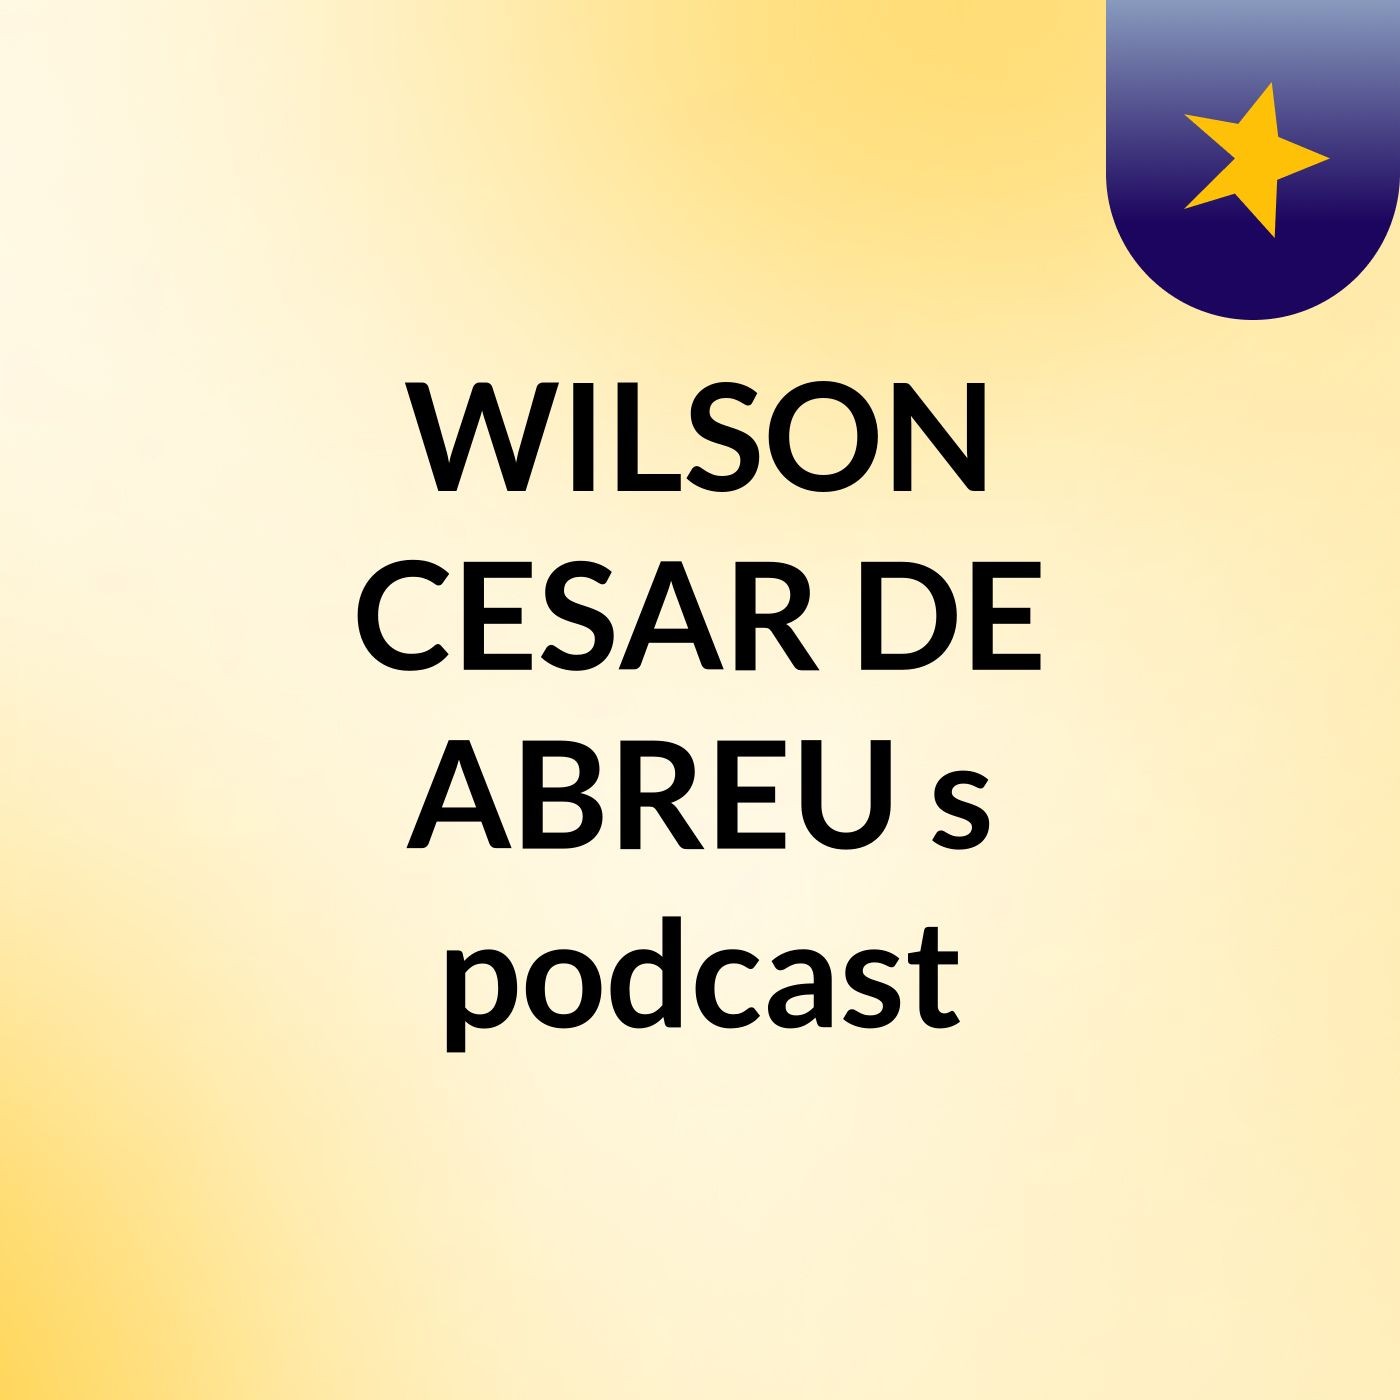 WILSON CESAR DE ABREU's podcast